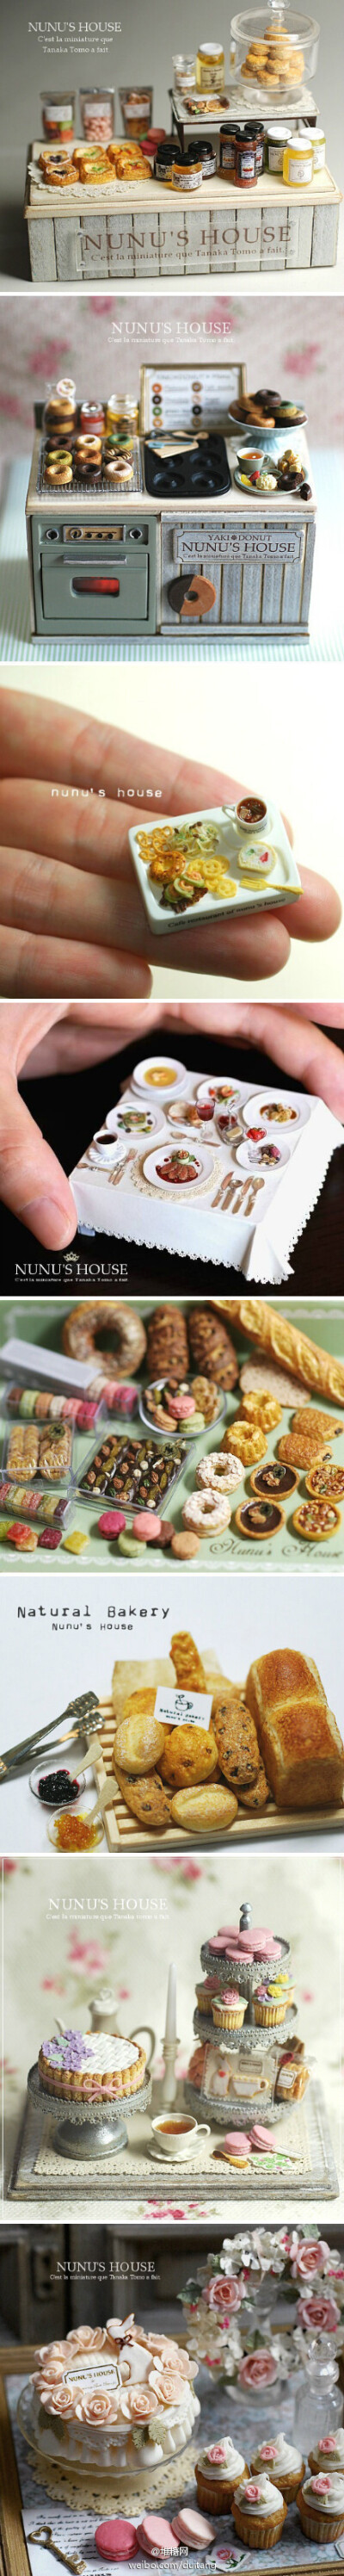 Nunu’s house是日本的一家甜点屋，以制作1/12的精美娃娃屋的道具而闻名。只有手指大小的迷你食物看起来依然美味可口。不过价格也不菲哦！哈哈，不知道您有没有一口把它们全吃掉的冲动呢？